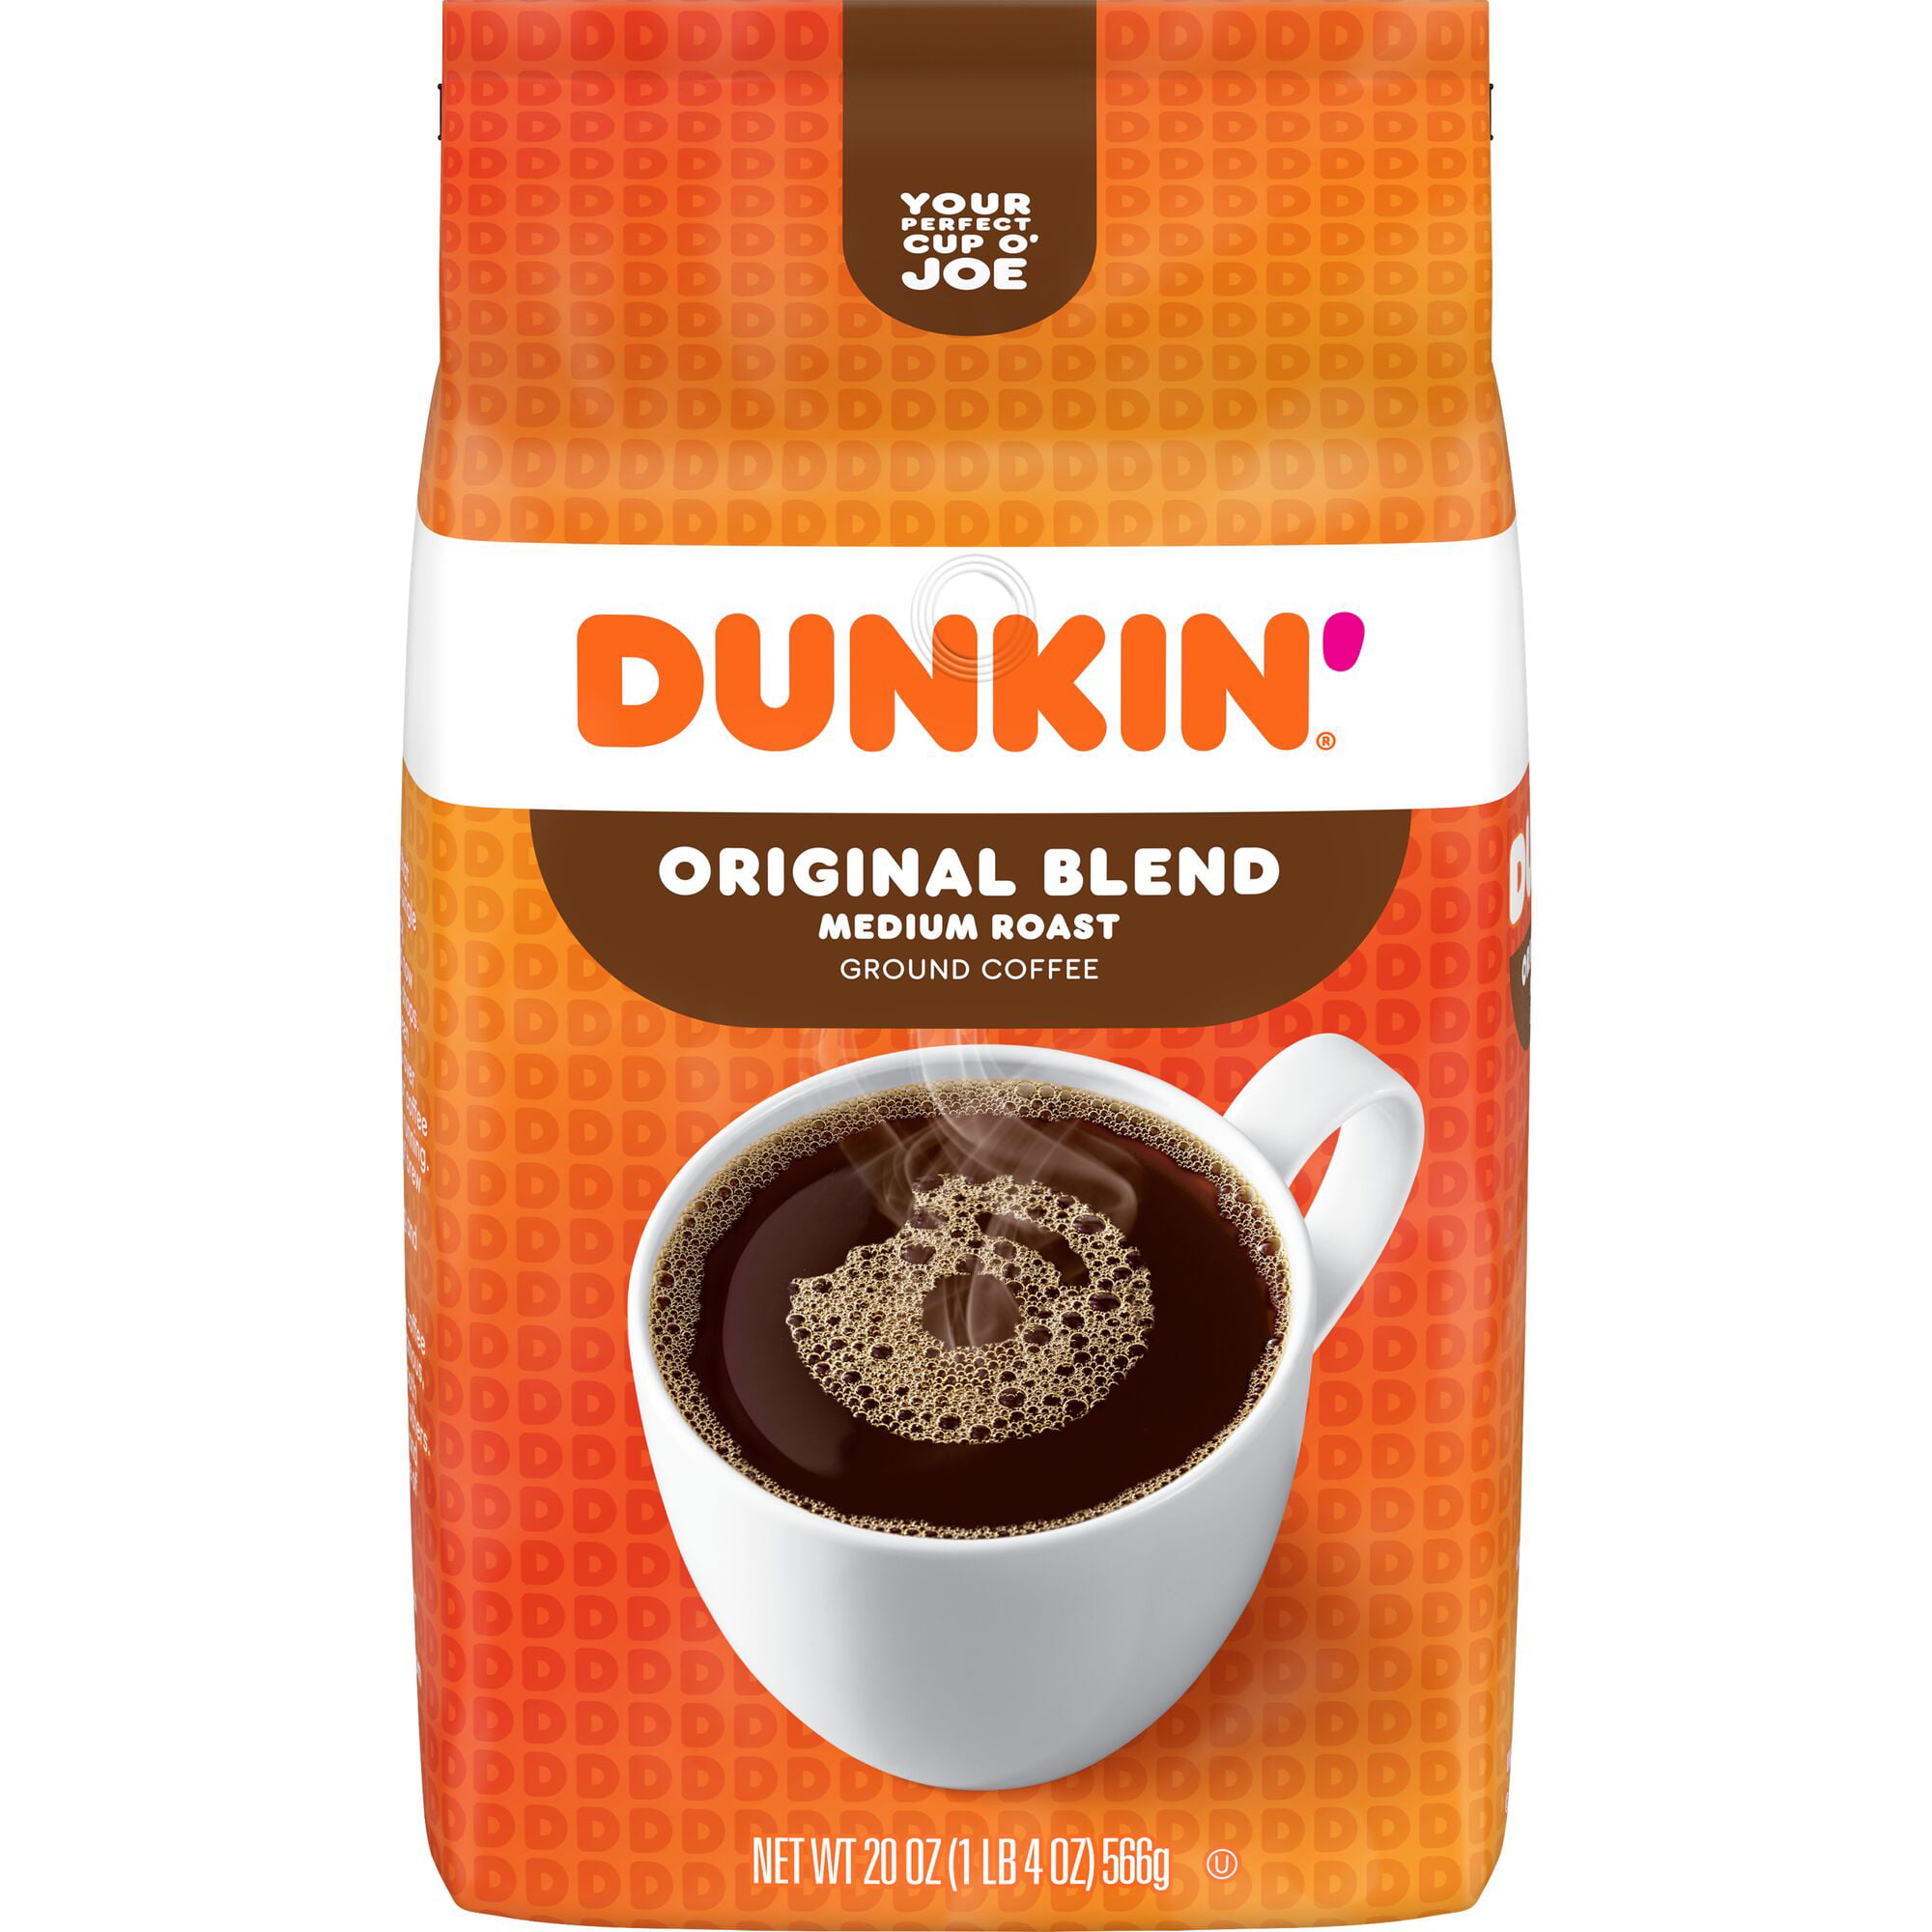 Dunkin' Original Blend Ground Coffee, Medium Roast, 20